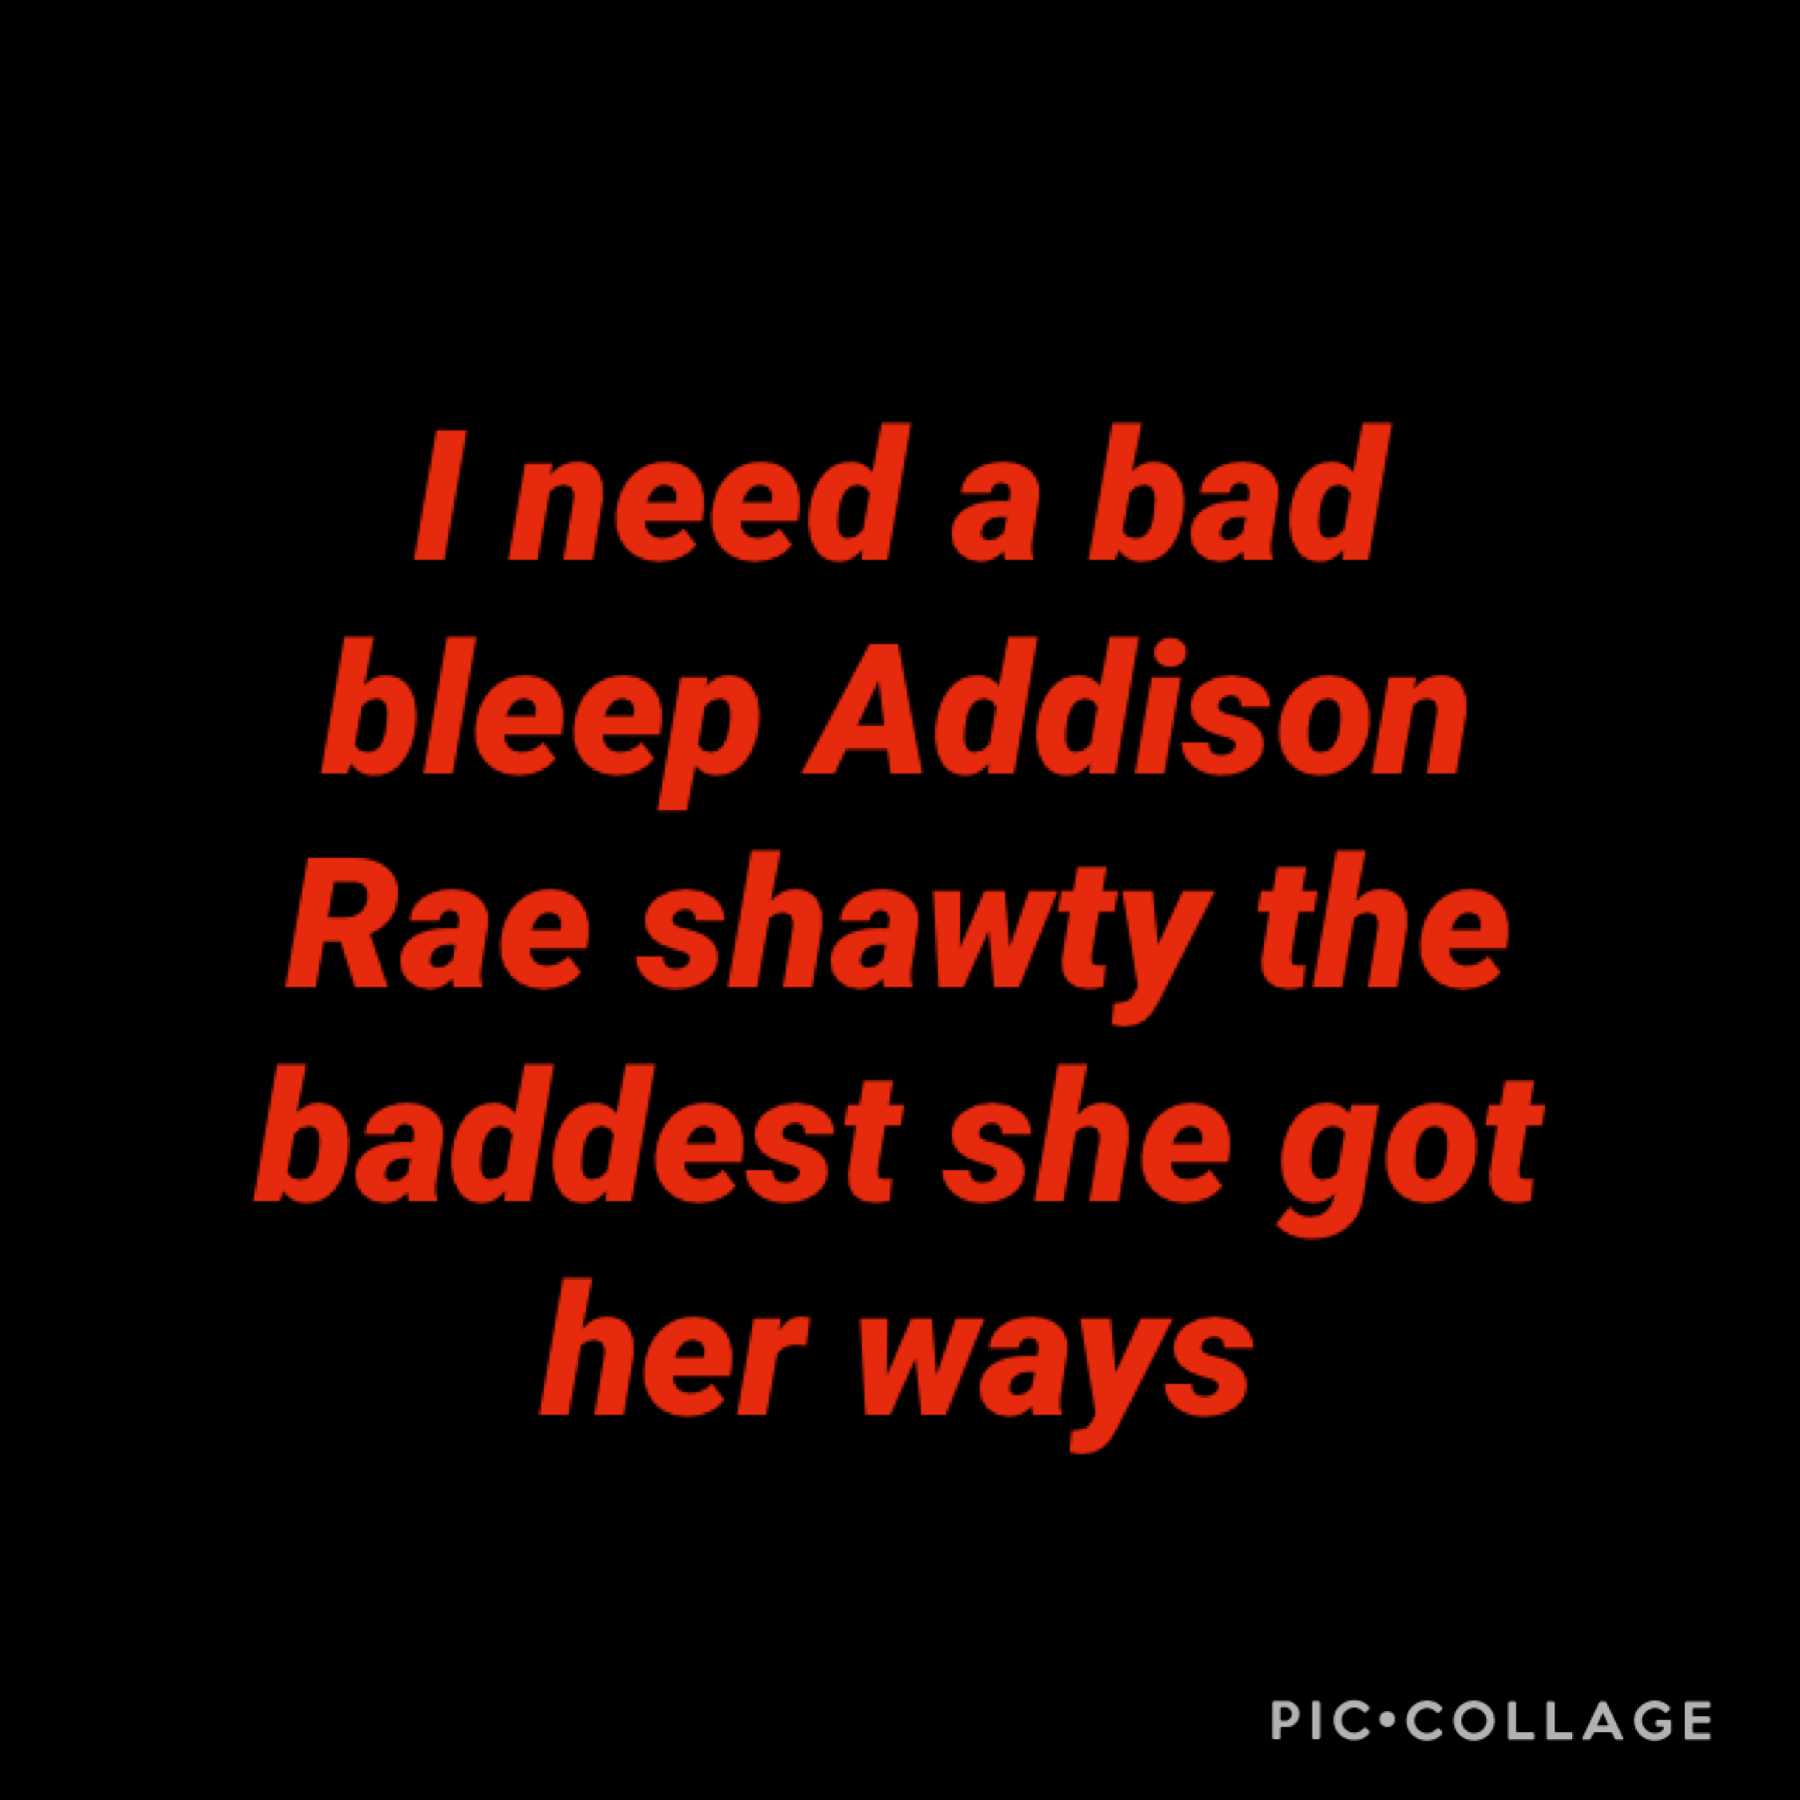 Addison Rae’s line